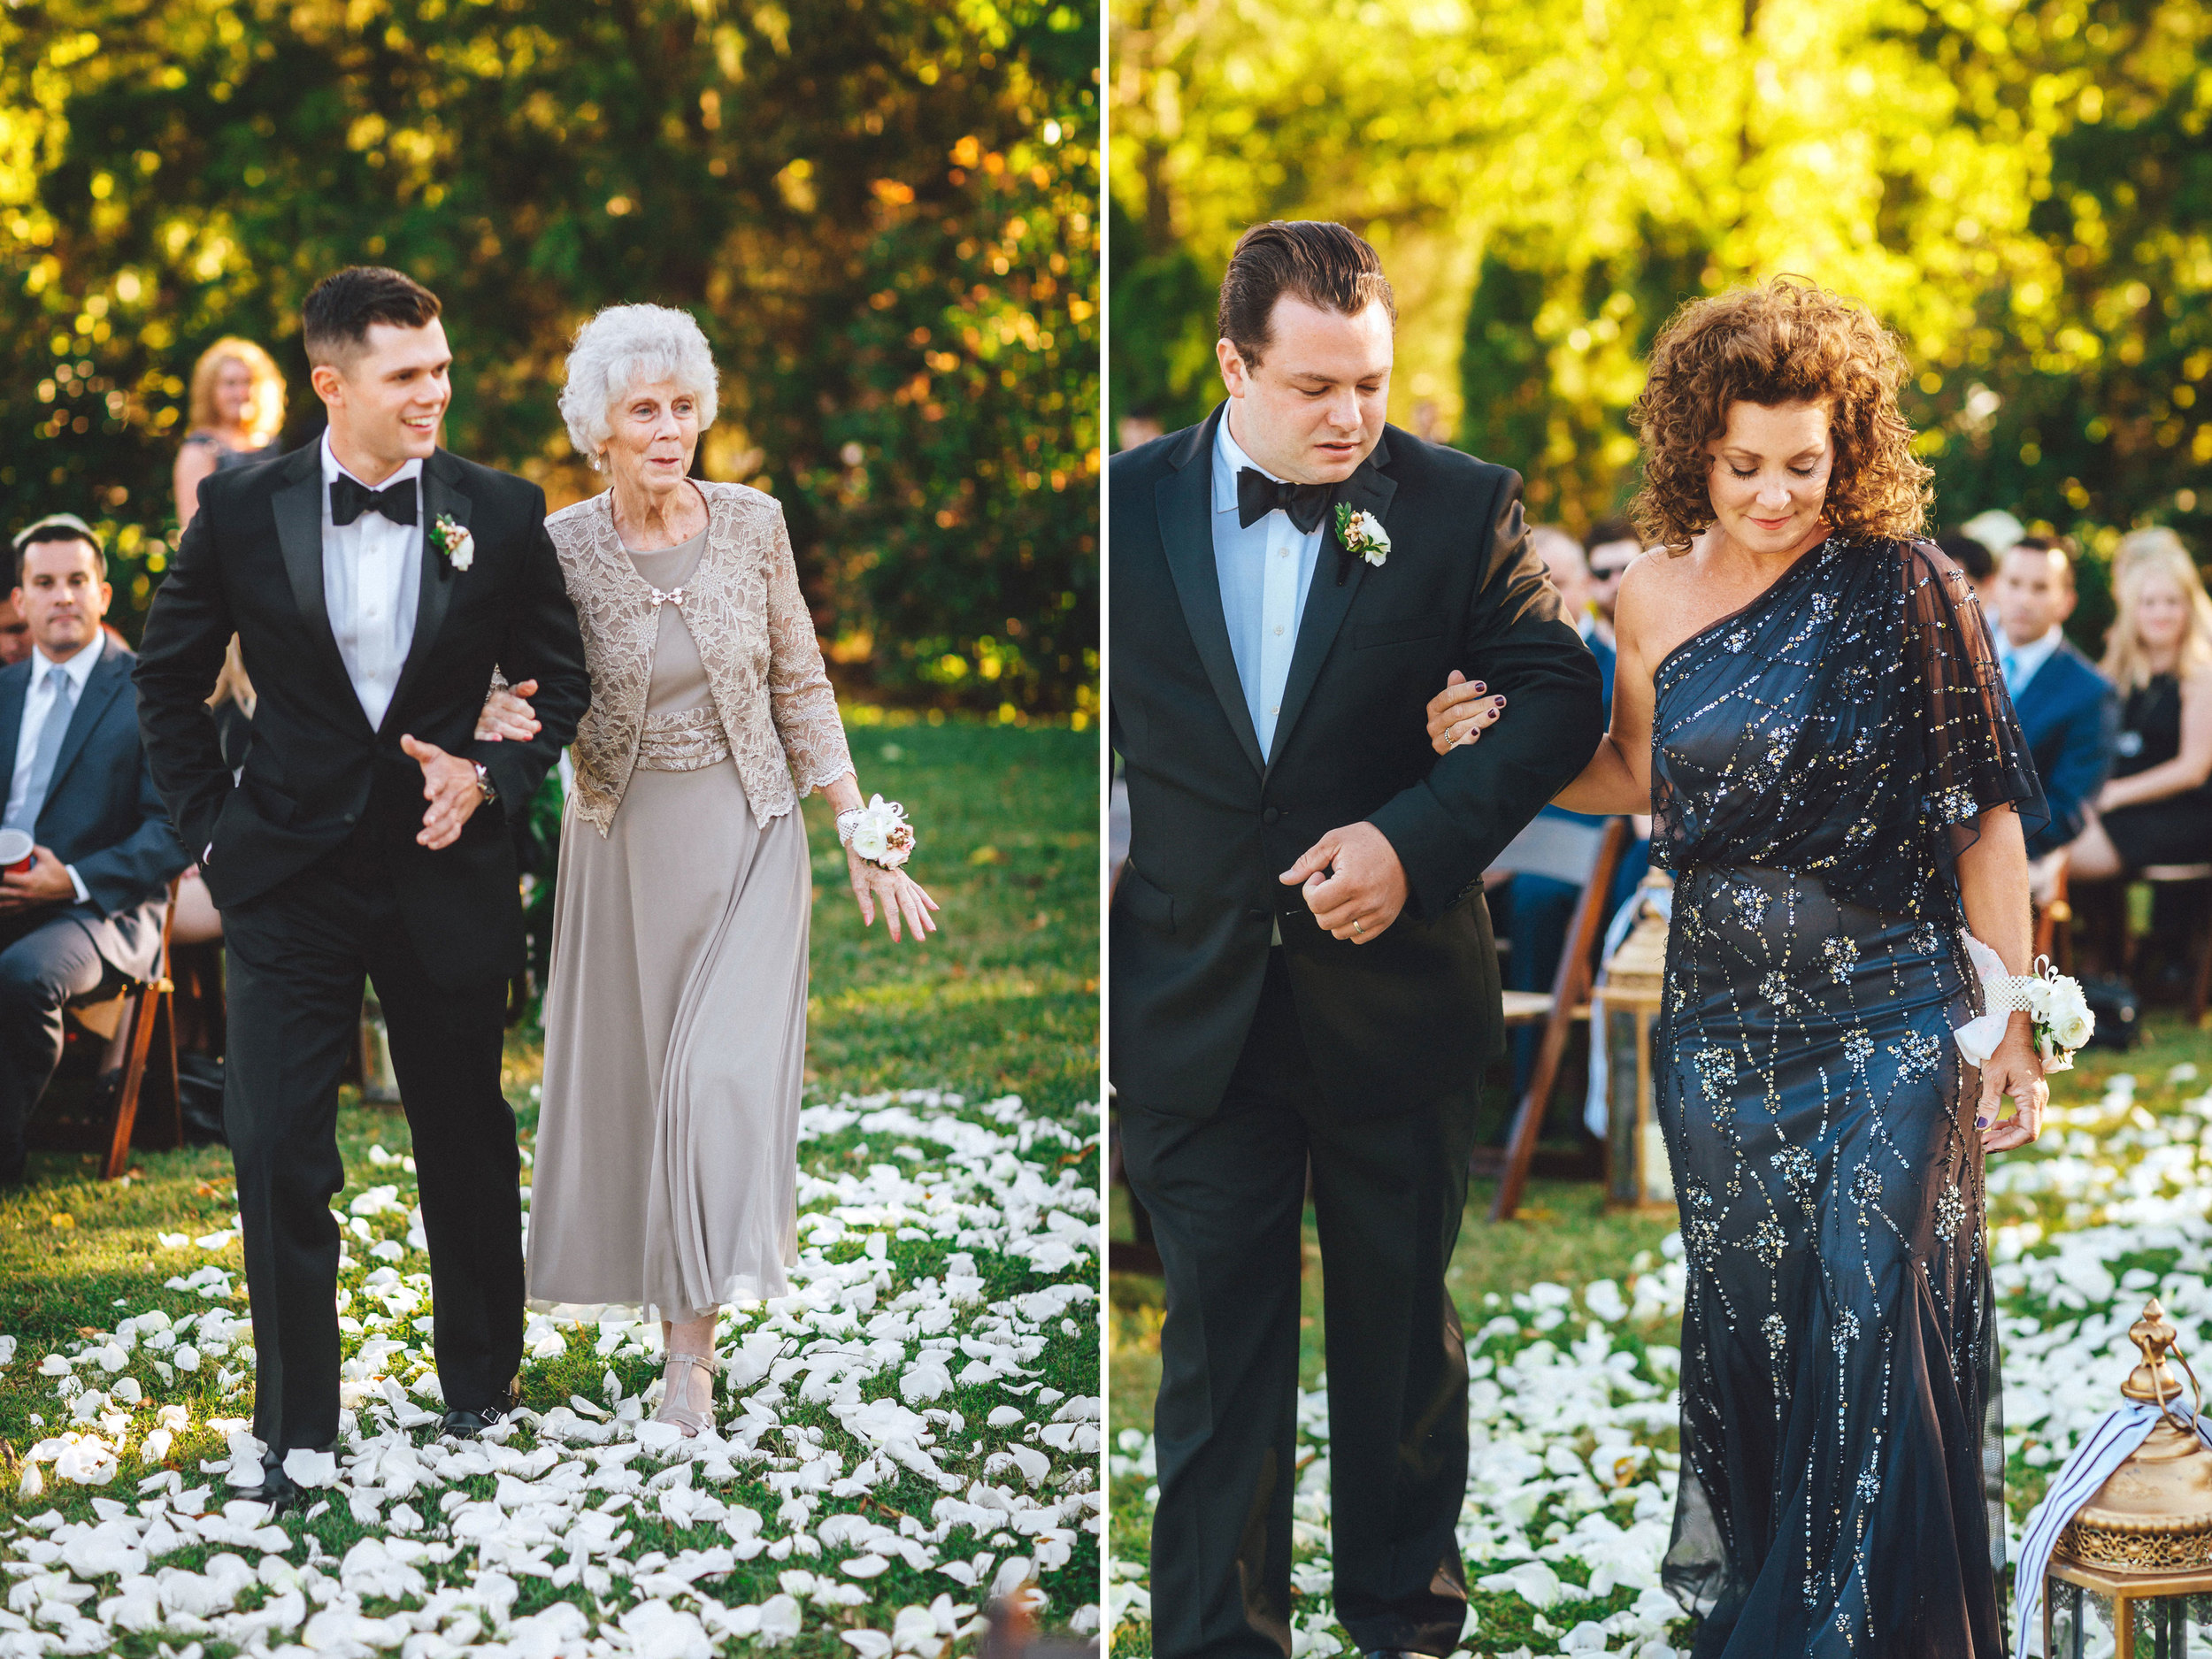 Me & Mr. Jones Wedding, Mother of the Bride, Grandmother of the Bride, Adrianna Papell Beaded Dress, Black Tie Wedding, Flower Petal Aisle, Rose Petals on Aisle